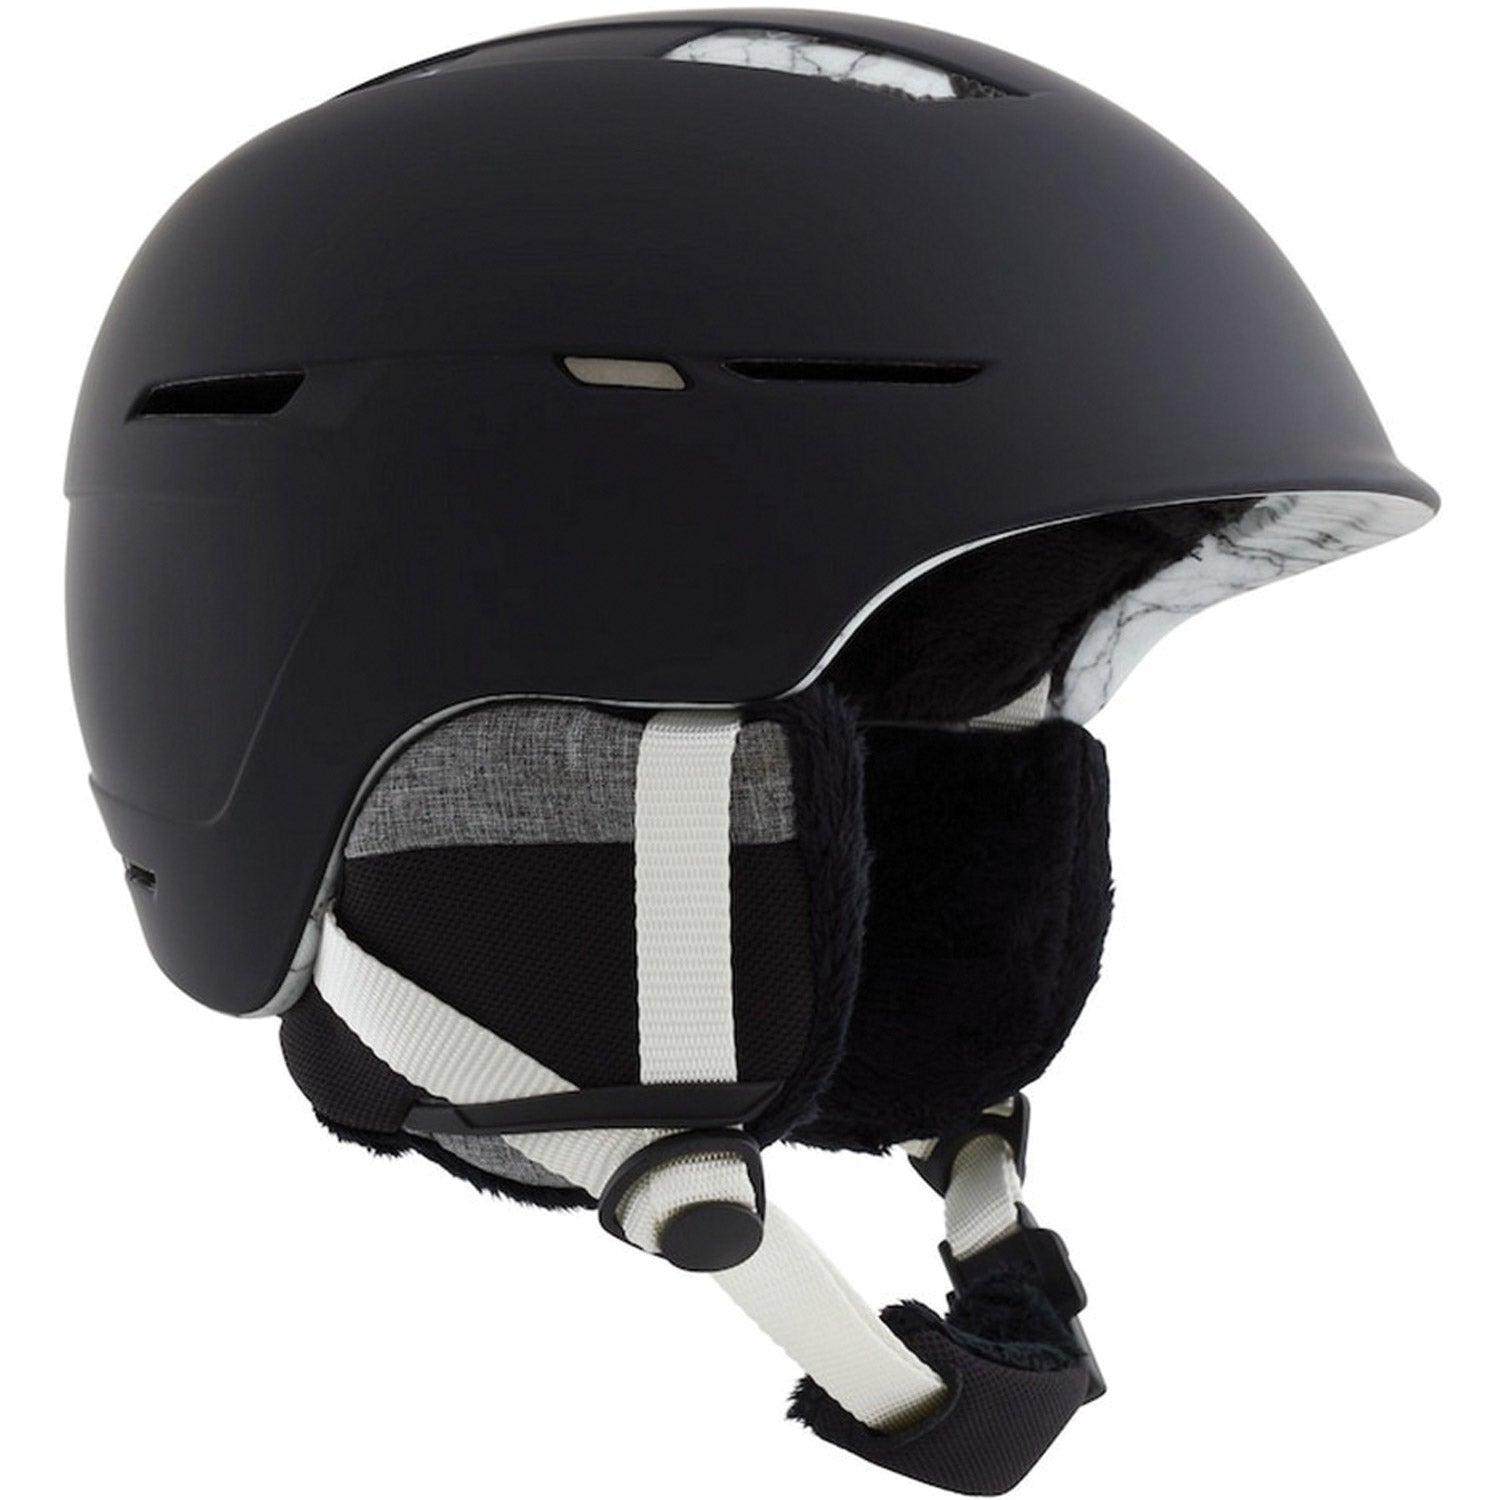 Auburn Snow Helmet